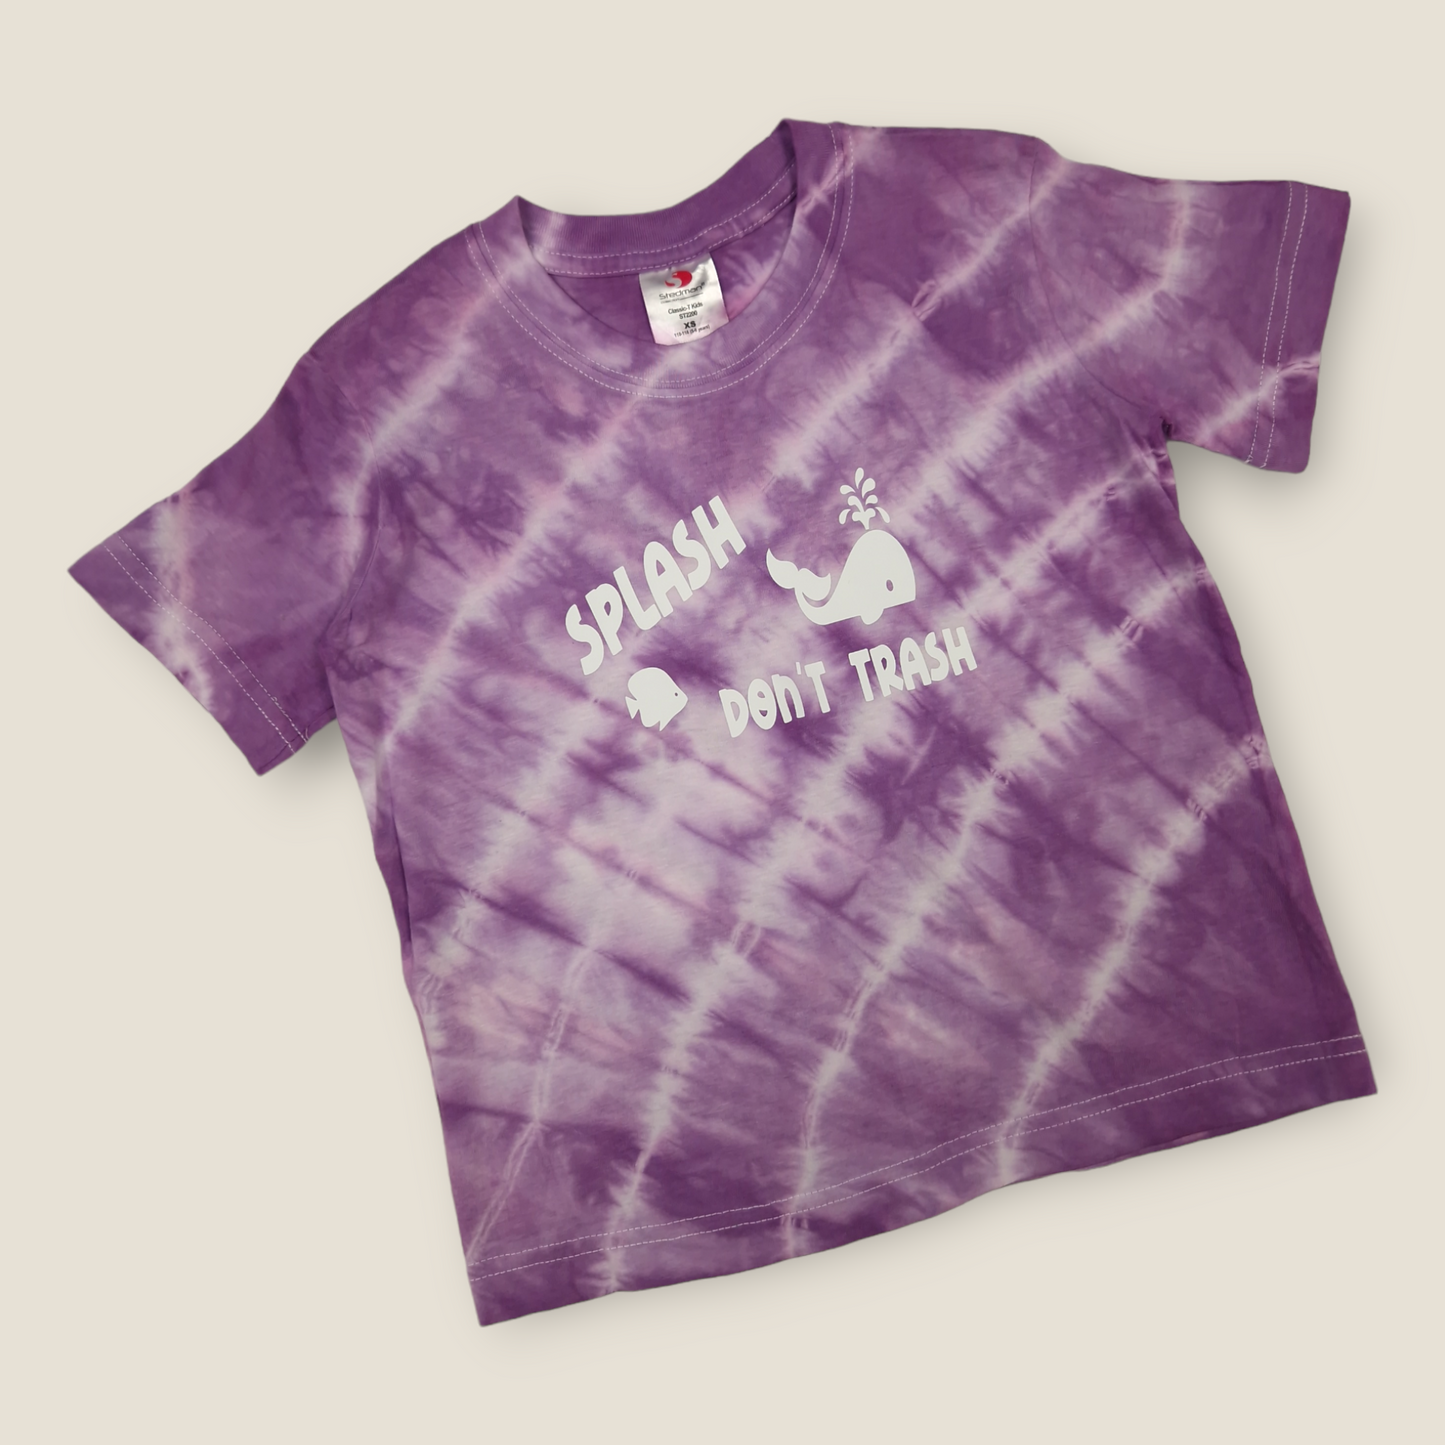 Tie Dye T-Shirt - 5-6 Years - Purple Splash don't Trash